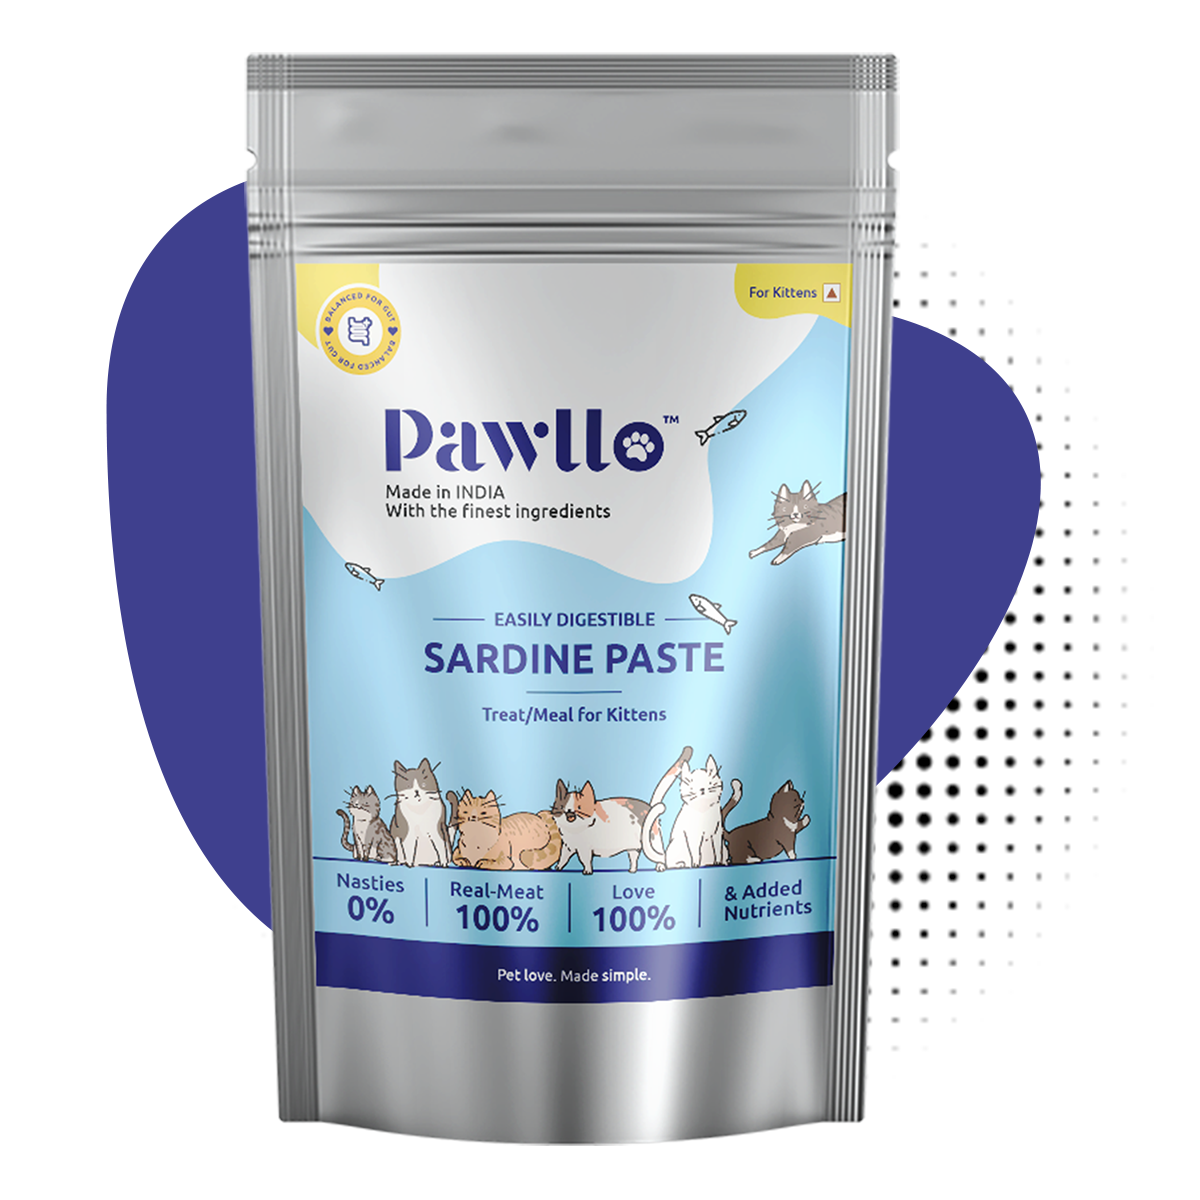 Sardine paste (Kittens) Protein-Packed Treat/Meal with Premium Sardine Goodness